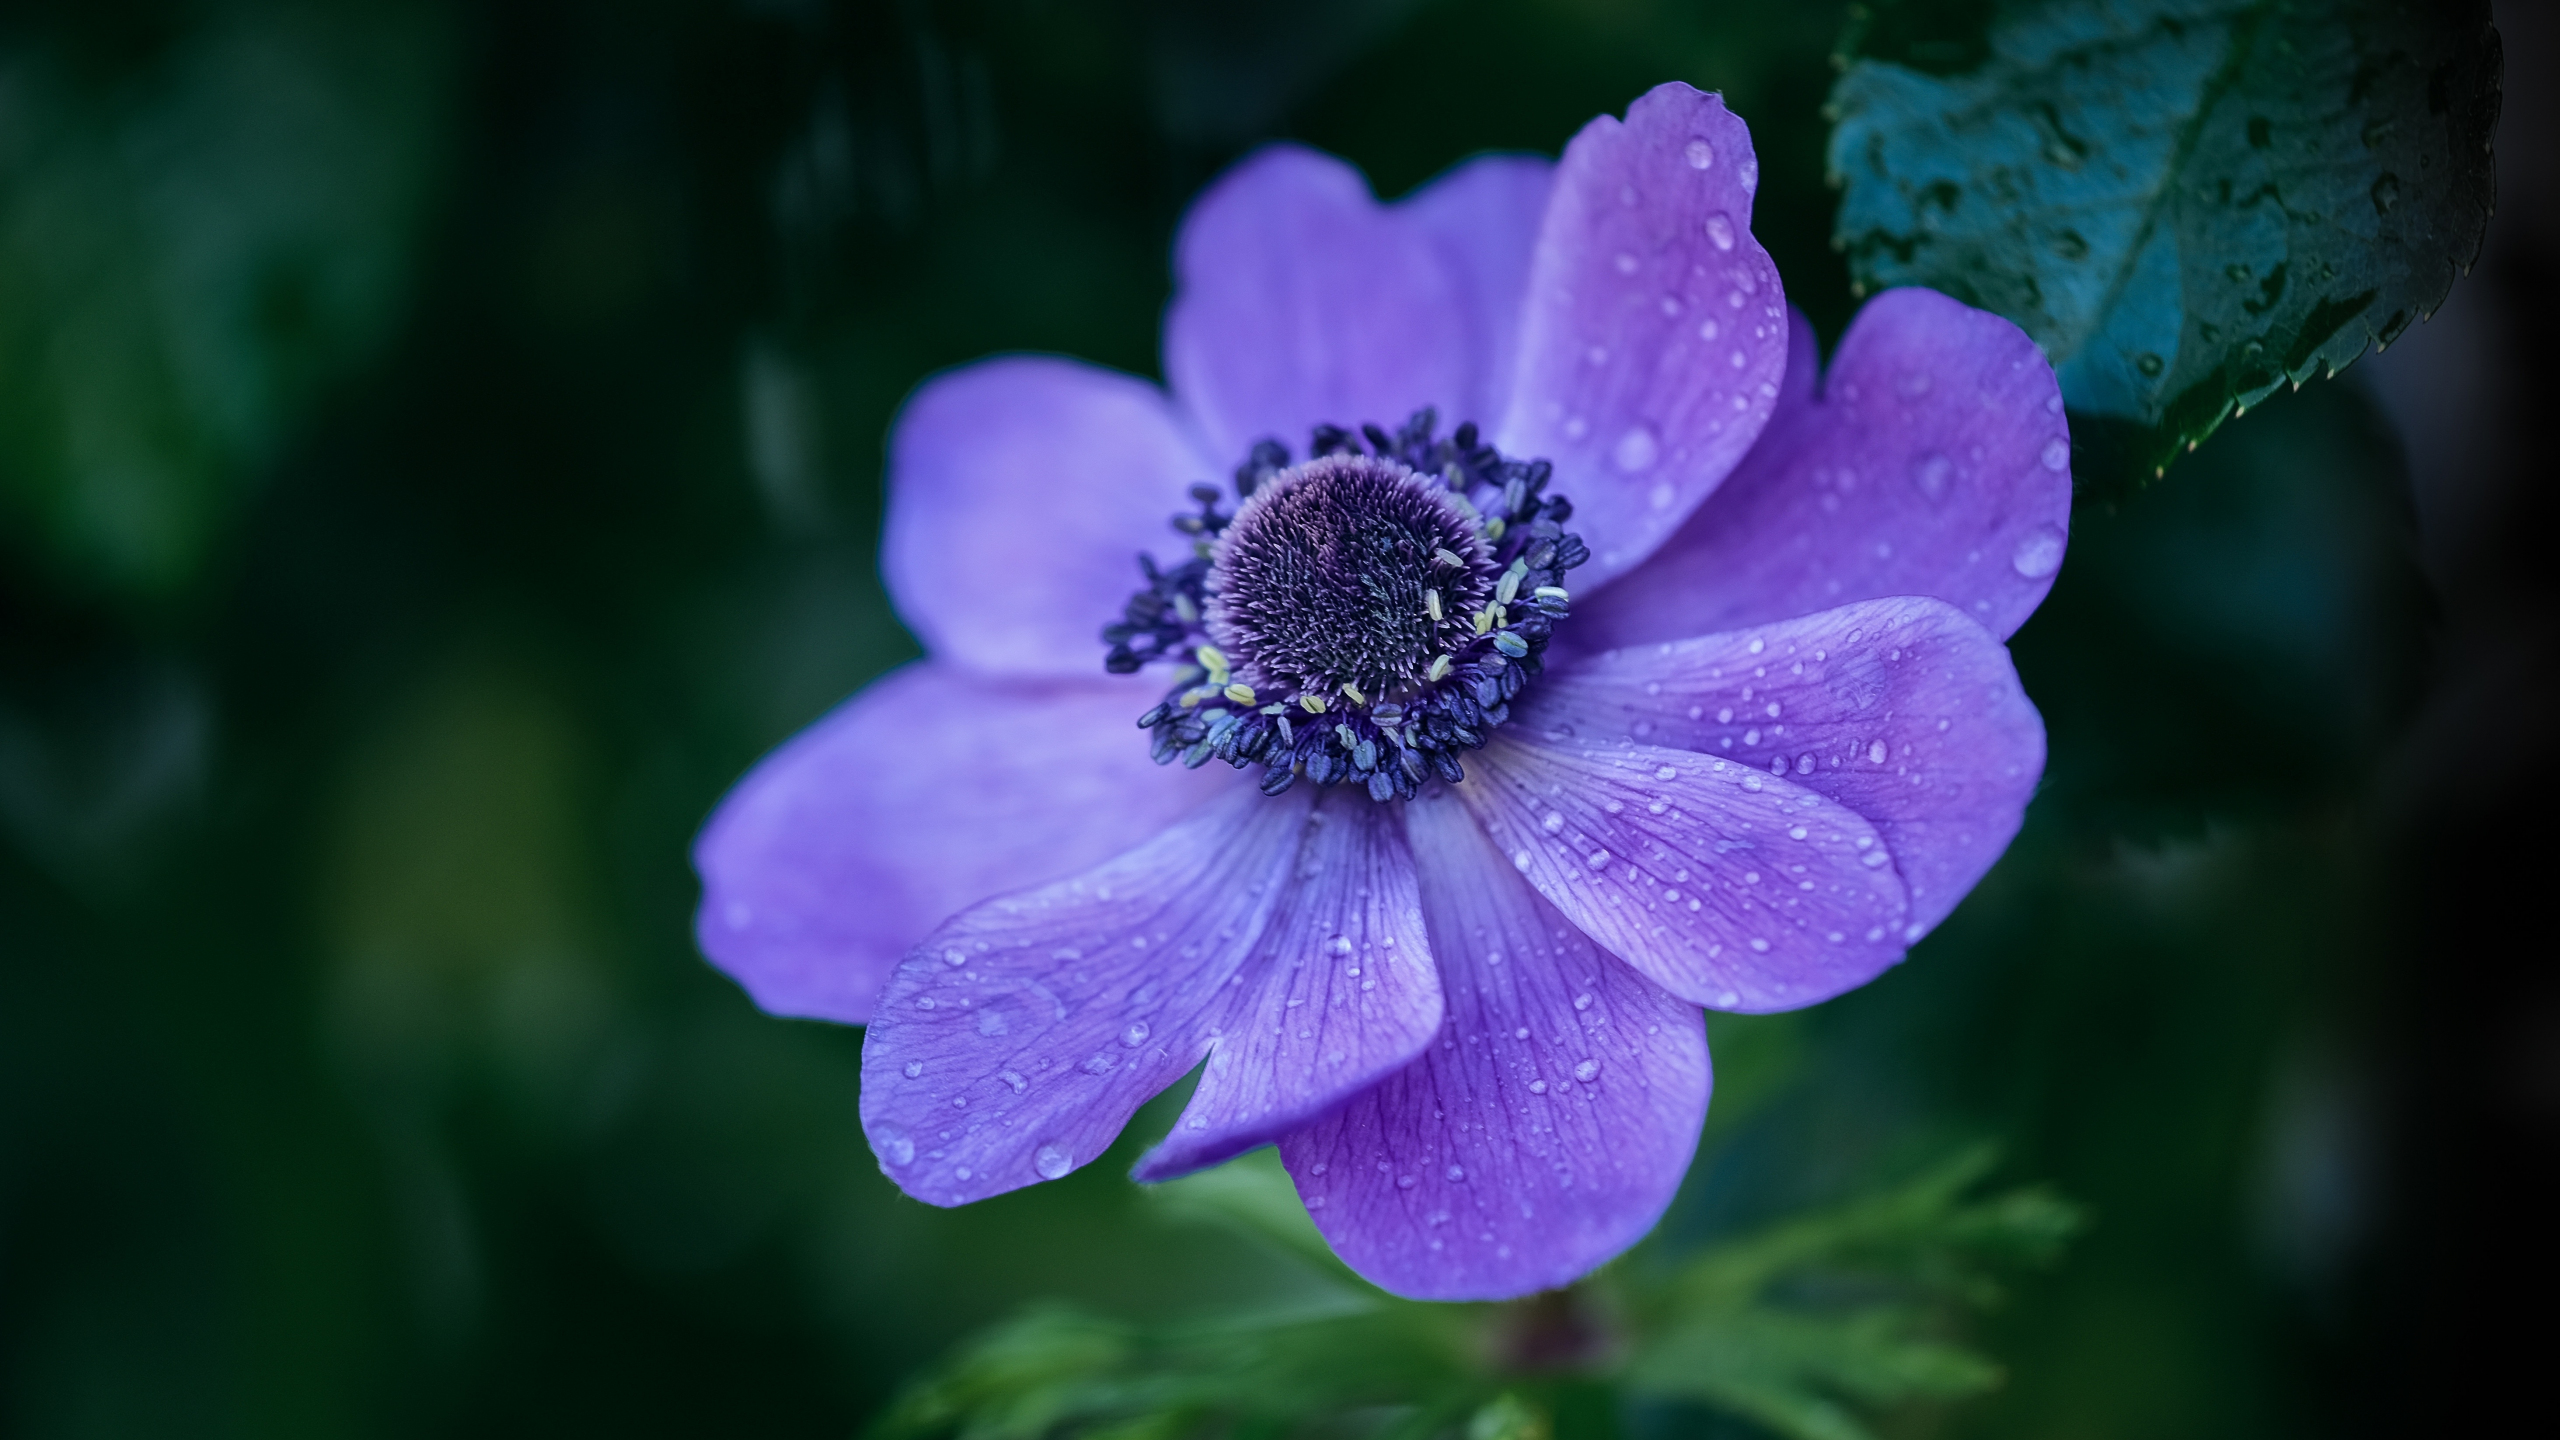 Download wallpaper 2560x1440 bright violet flower, drops, dual wide 16: ...